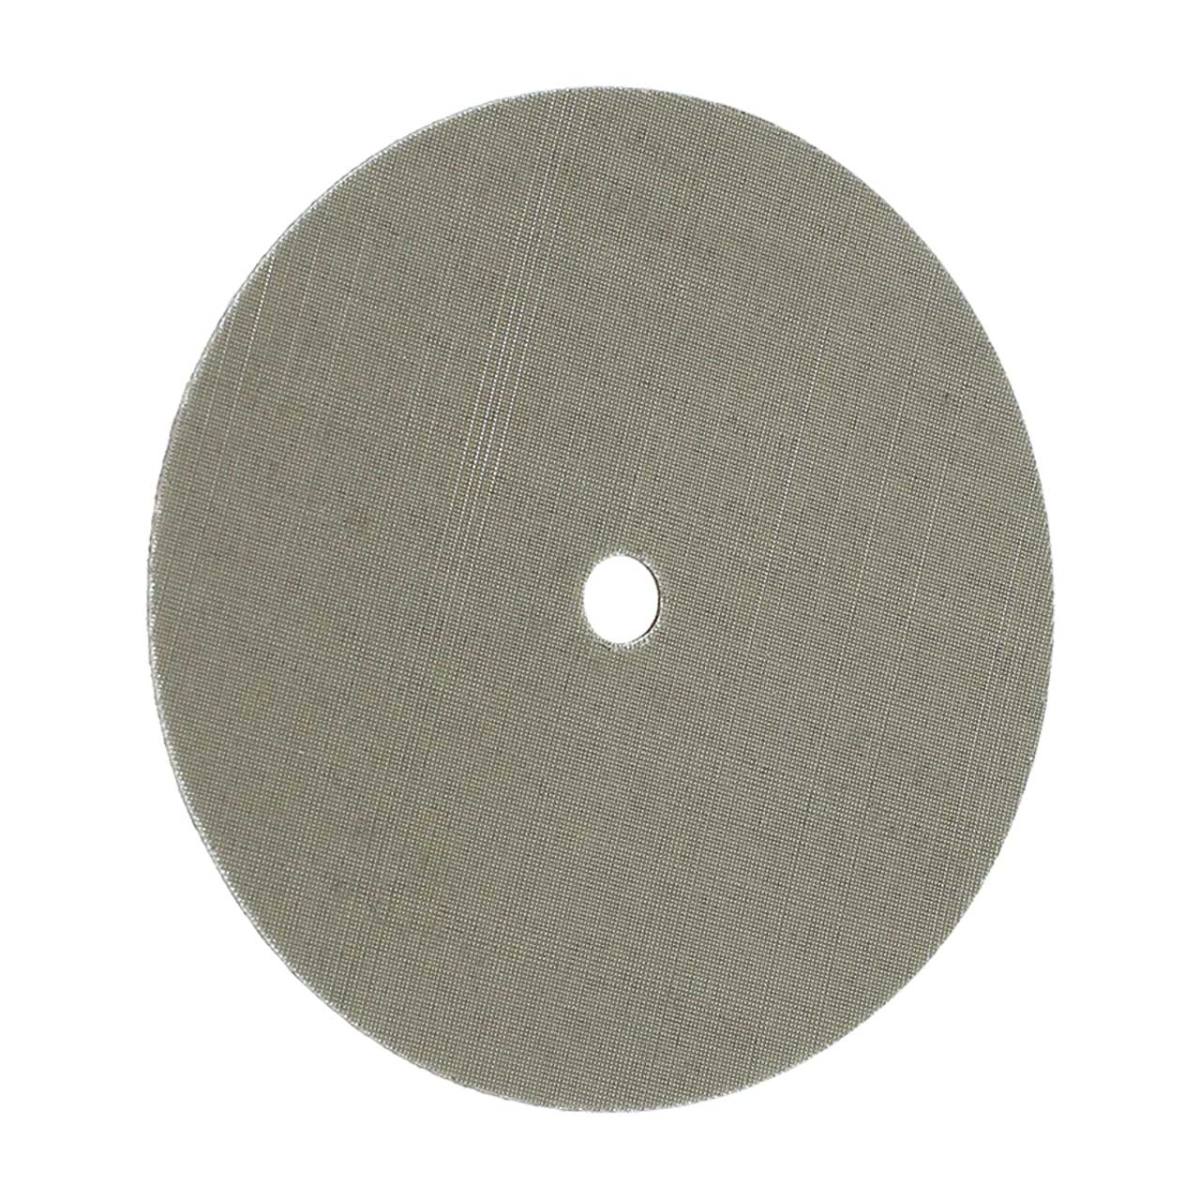 FIX KLETT Trizact disc, 115 mm x 10 mm, grain 400 / A 45, hook-and-loop fastener